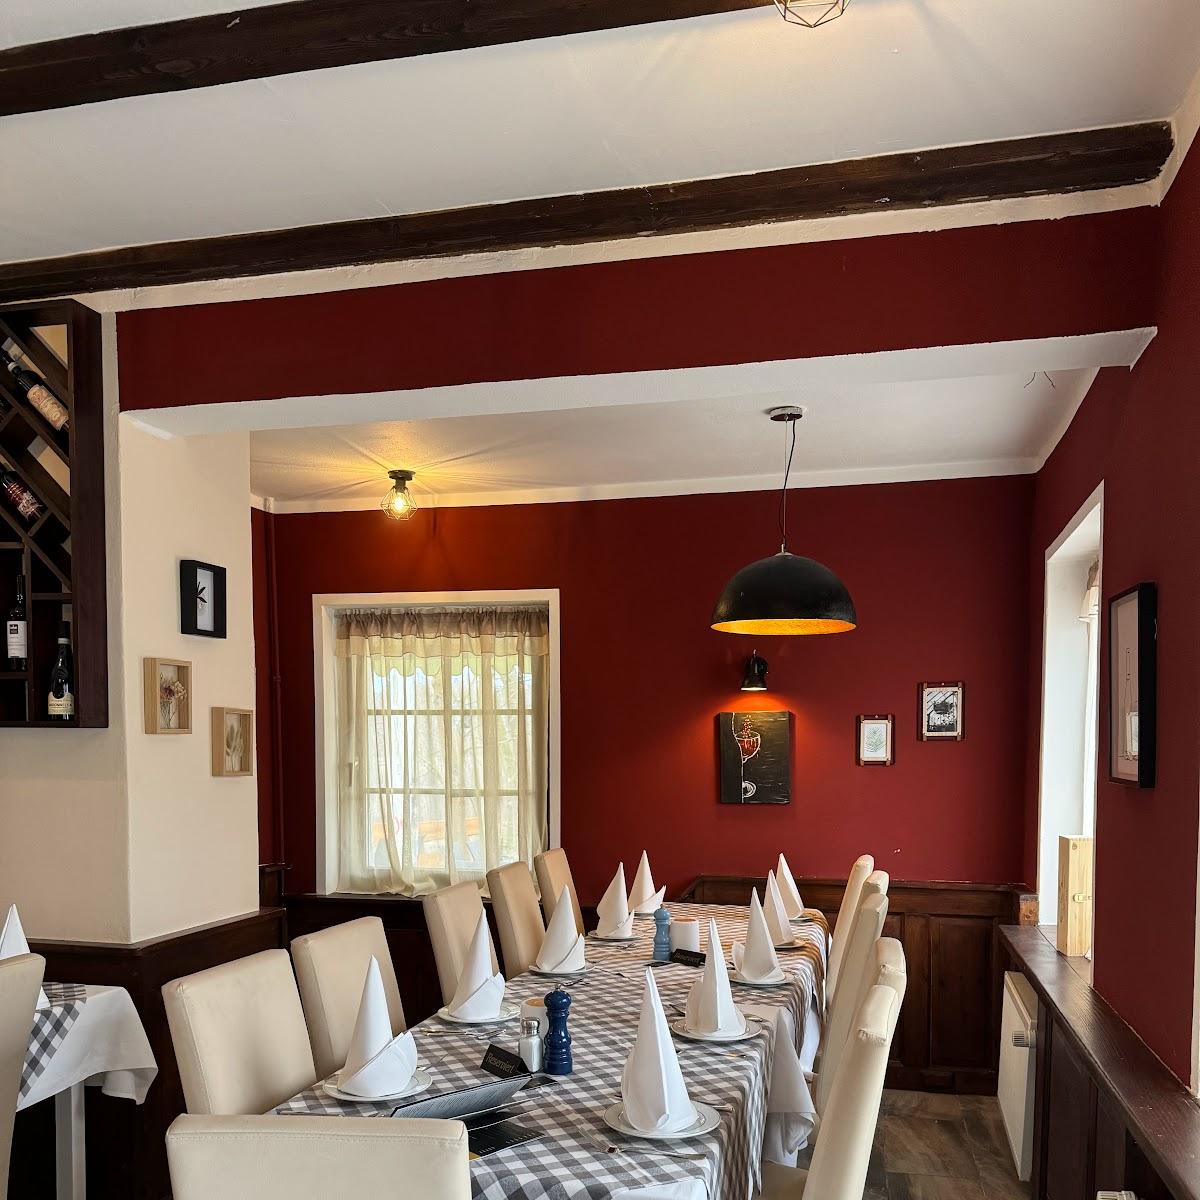 Restaurant "Villa Belvedere" in Wandlitz